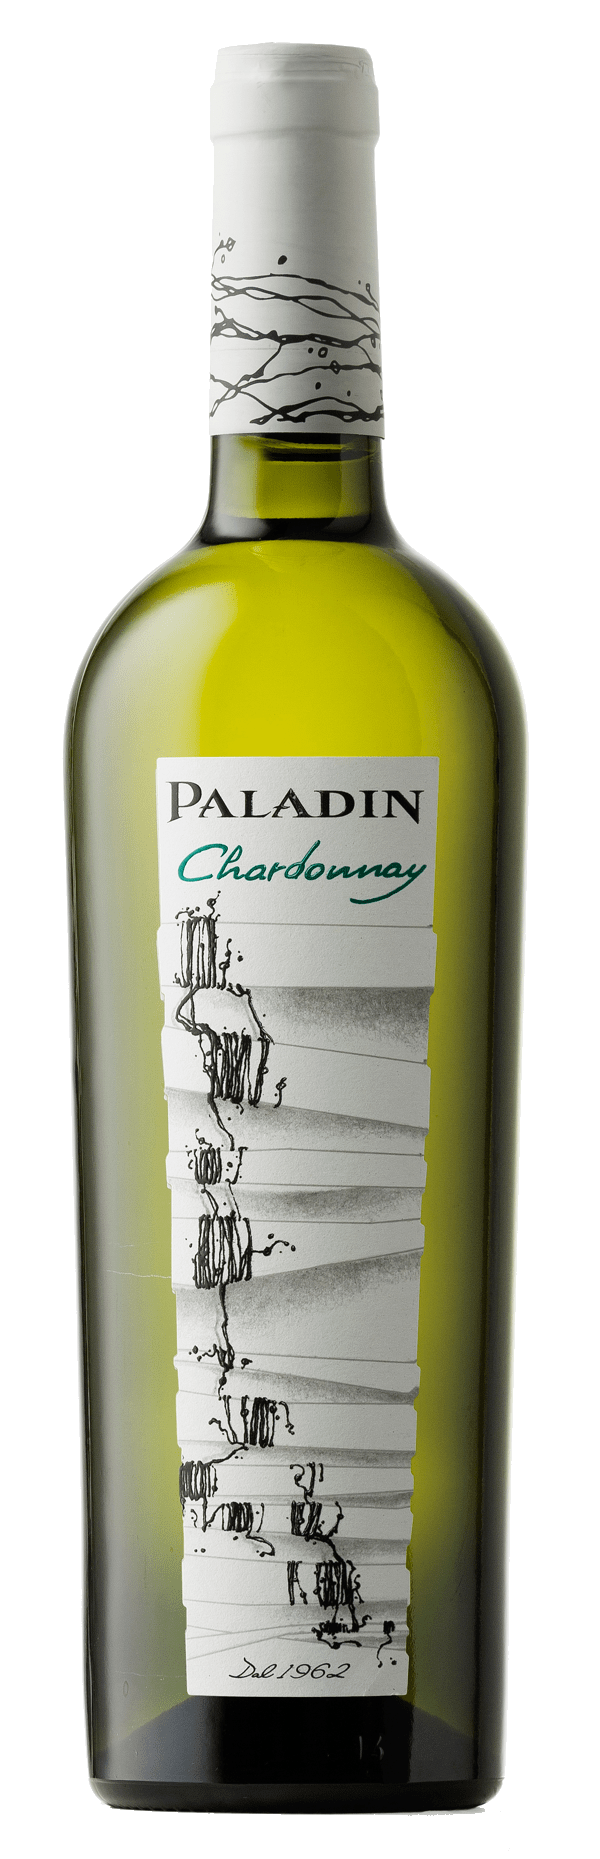 Paladin Chardonnay, Veneto IGP